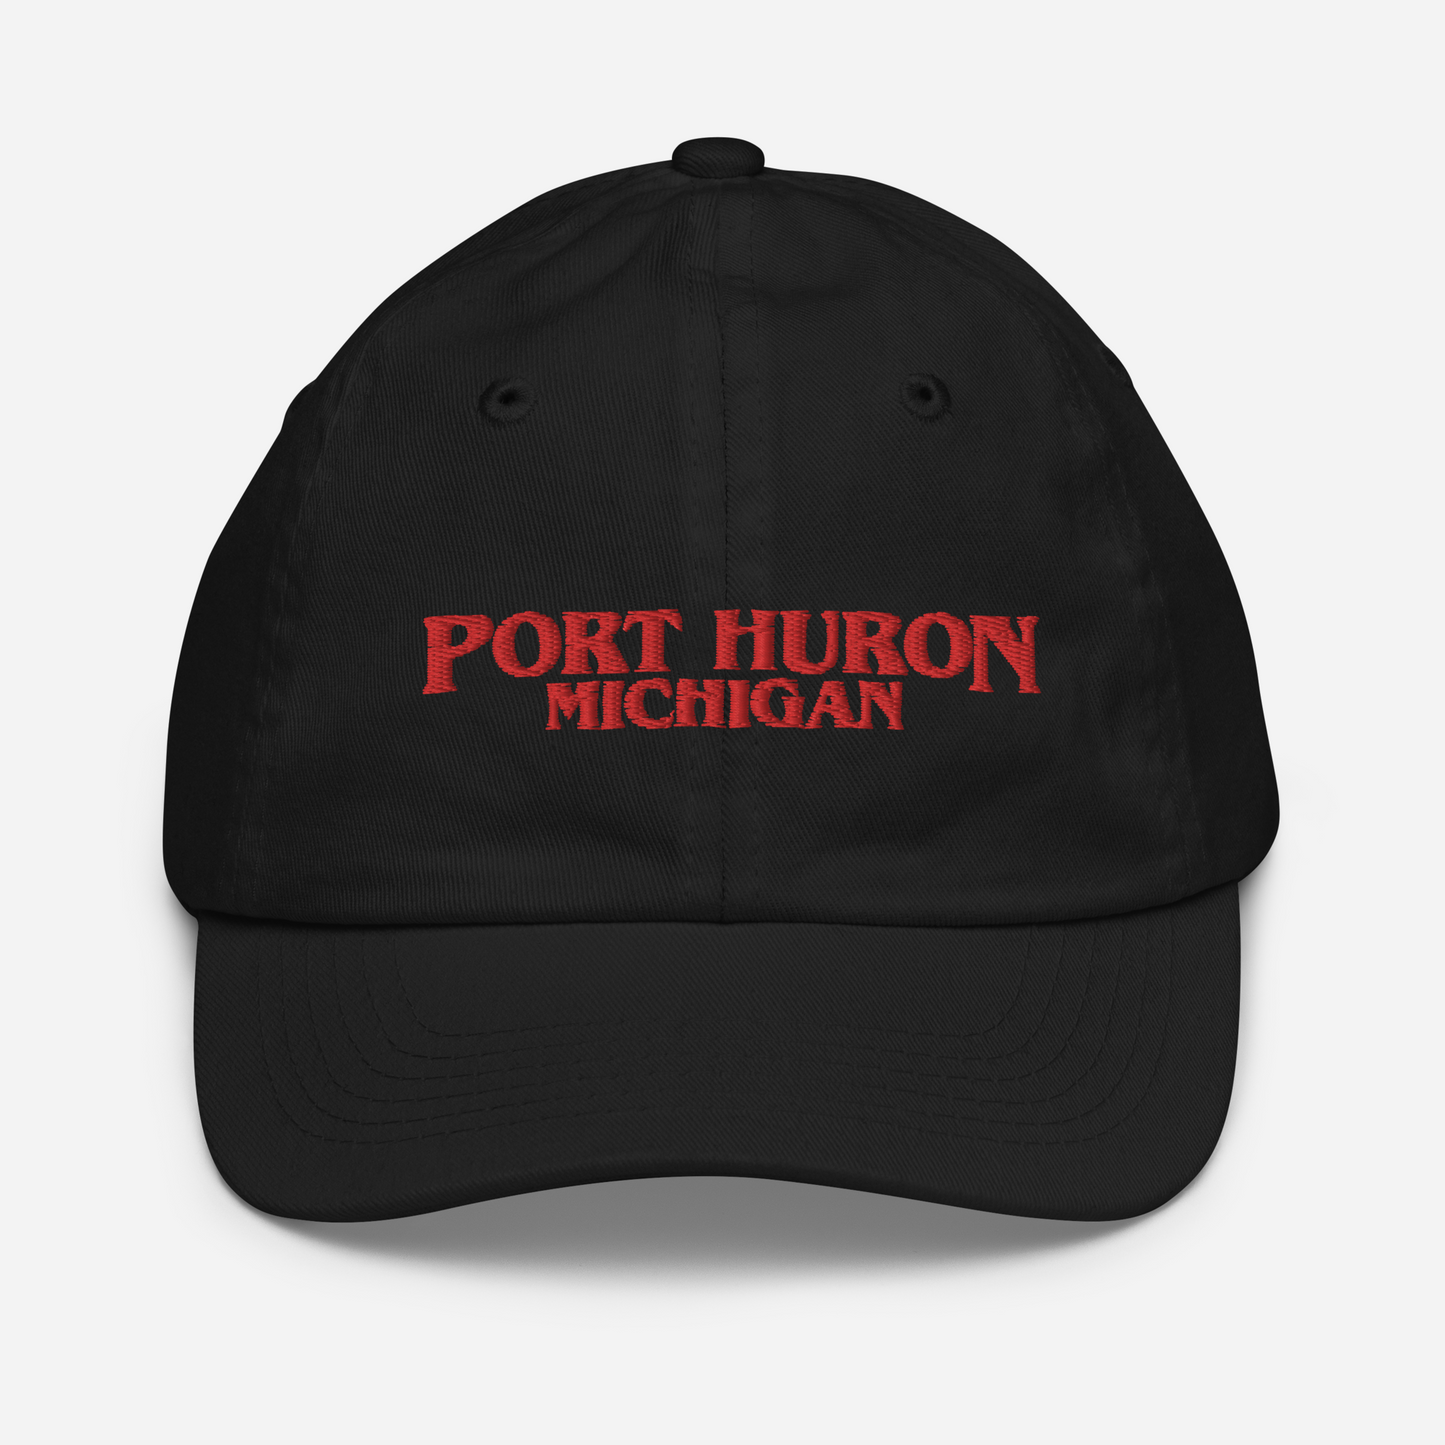 'Port Huron Michigan' Youth Baseball Cap (1980s Drama Parody)